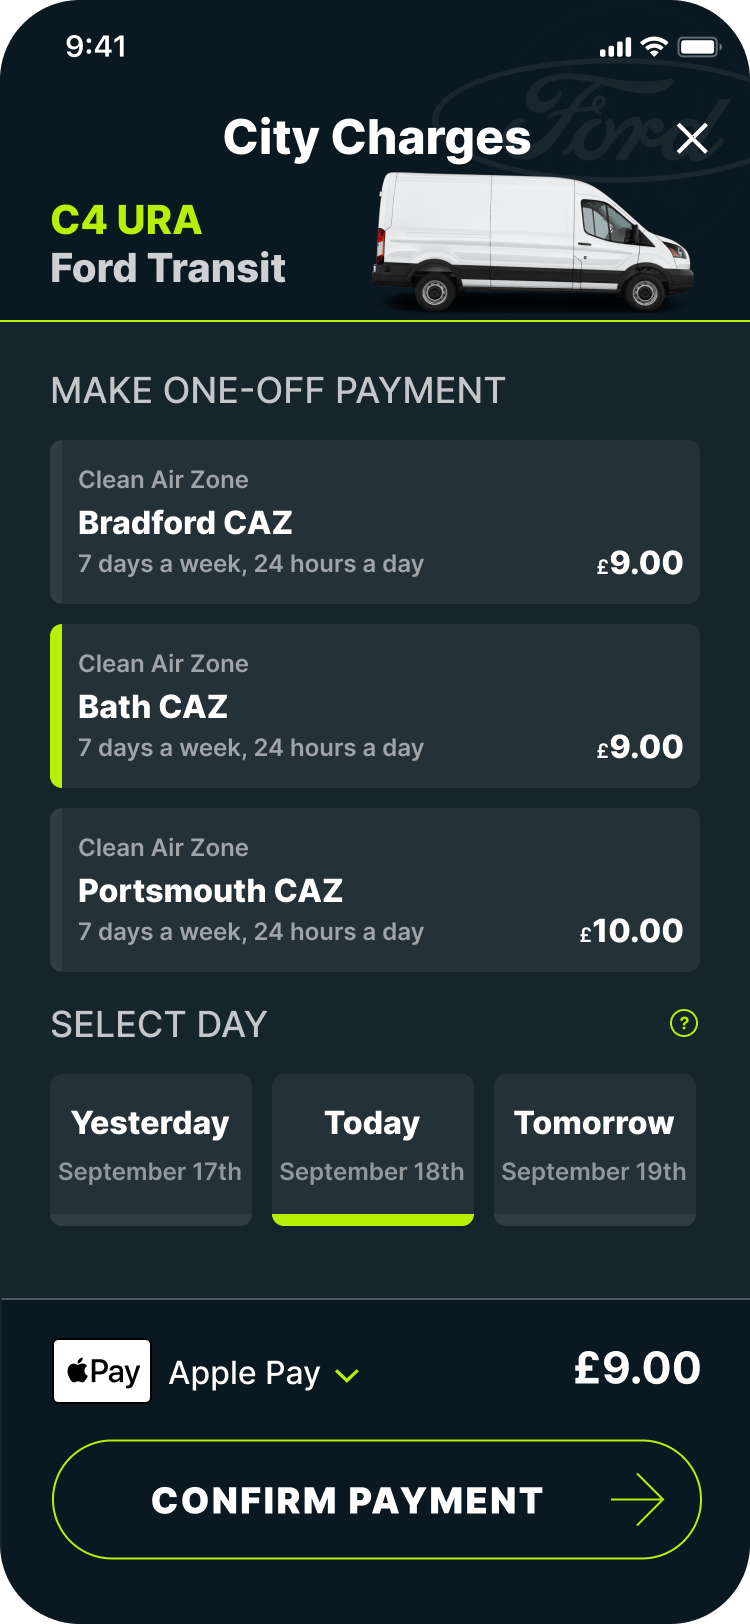 Caura app screen showing the £9.00 fee for Bath CAZ today